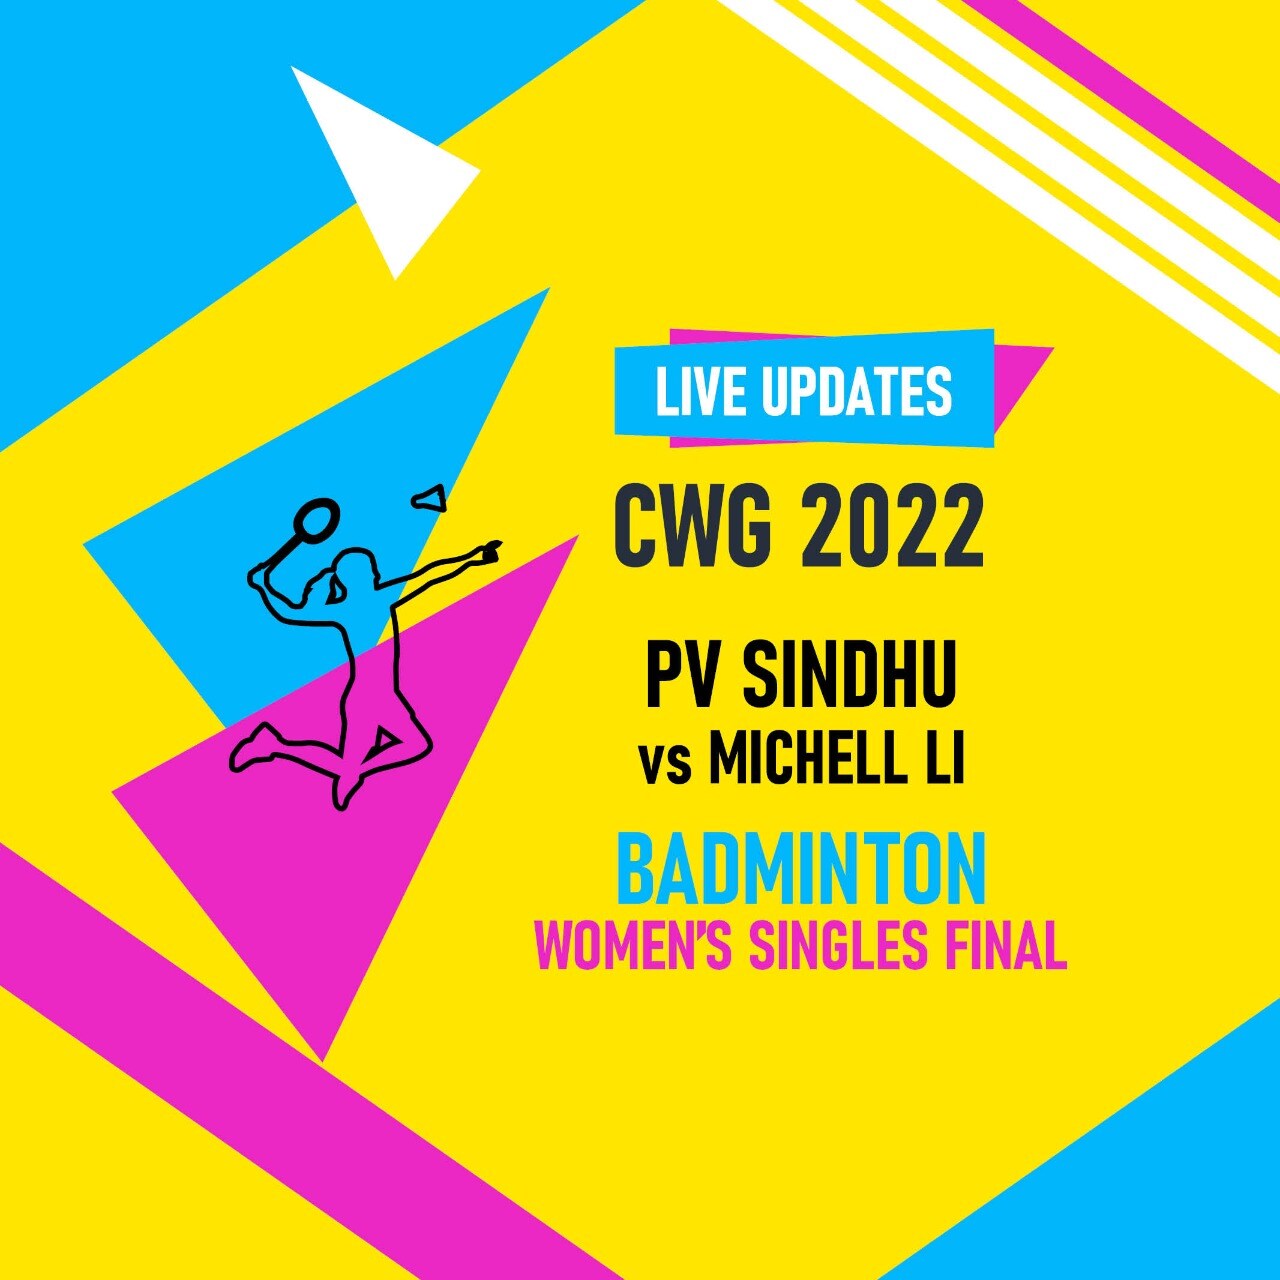 pv sindhu cwg 2022 live score